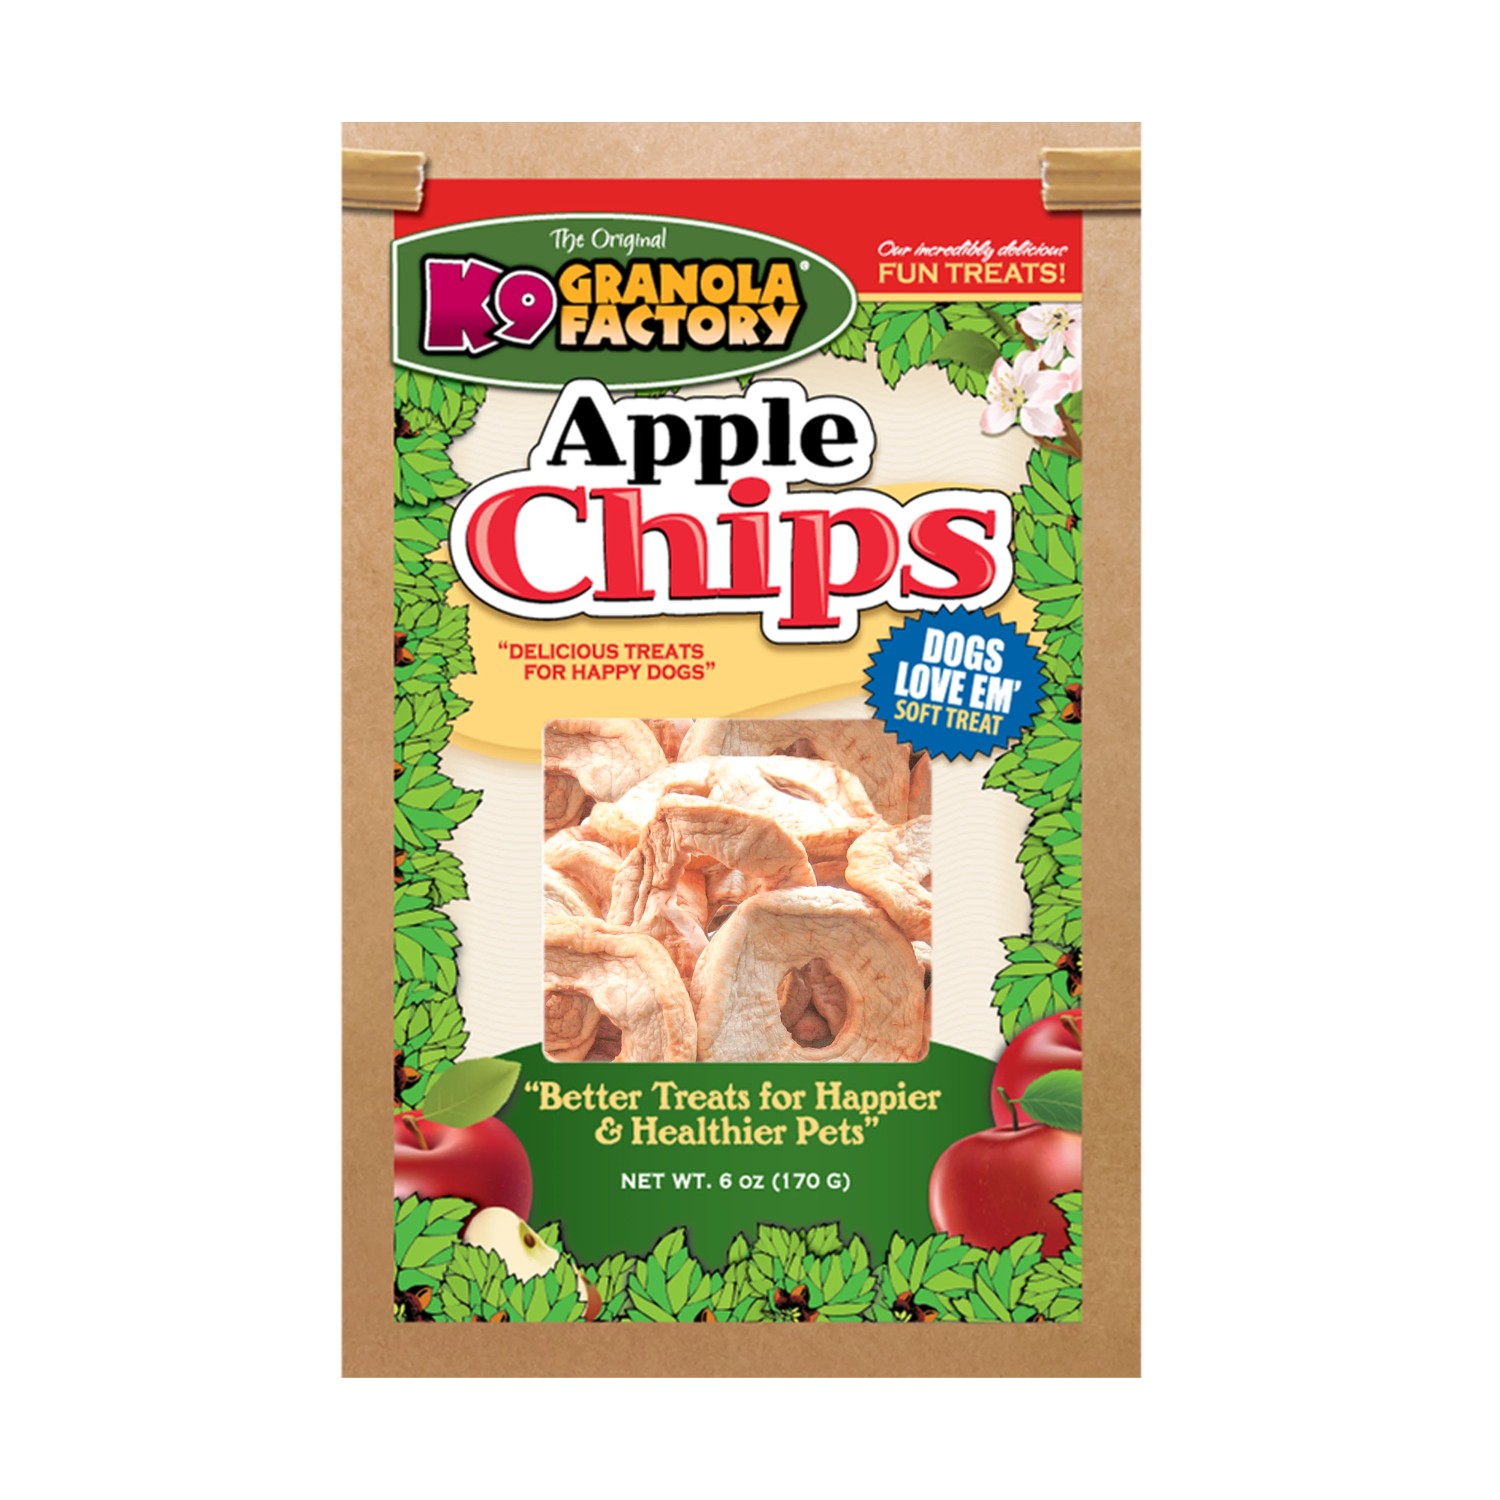 K9 Granola Factory Apple Chips Dog Treats